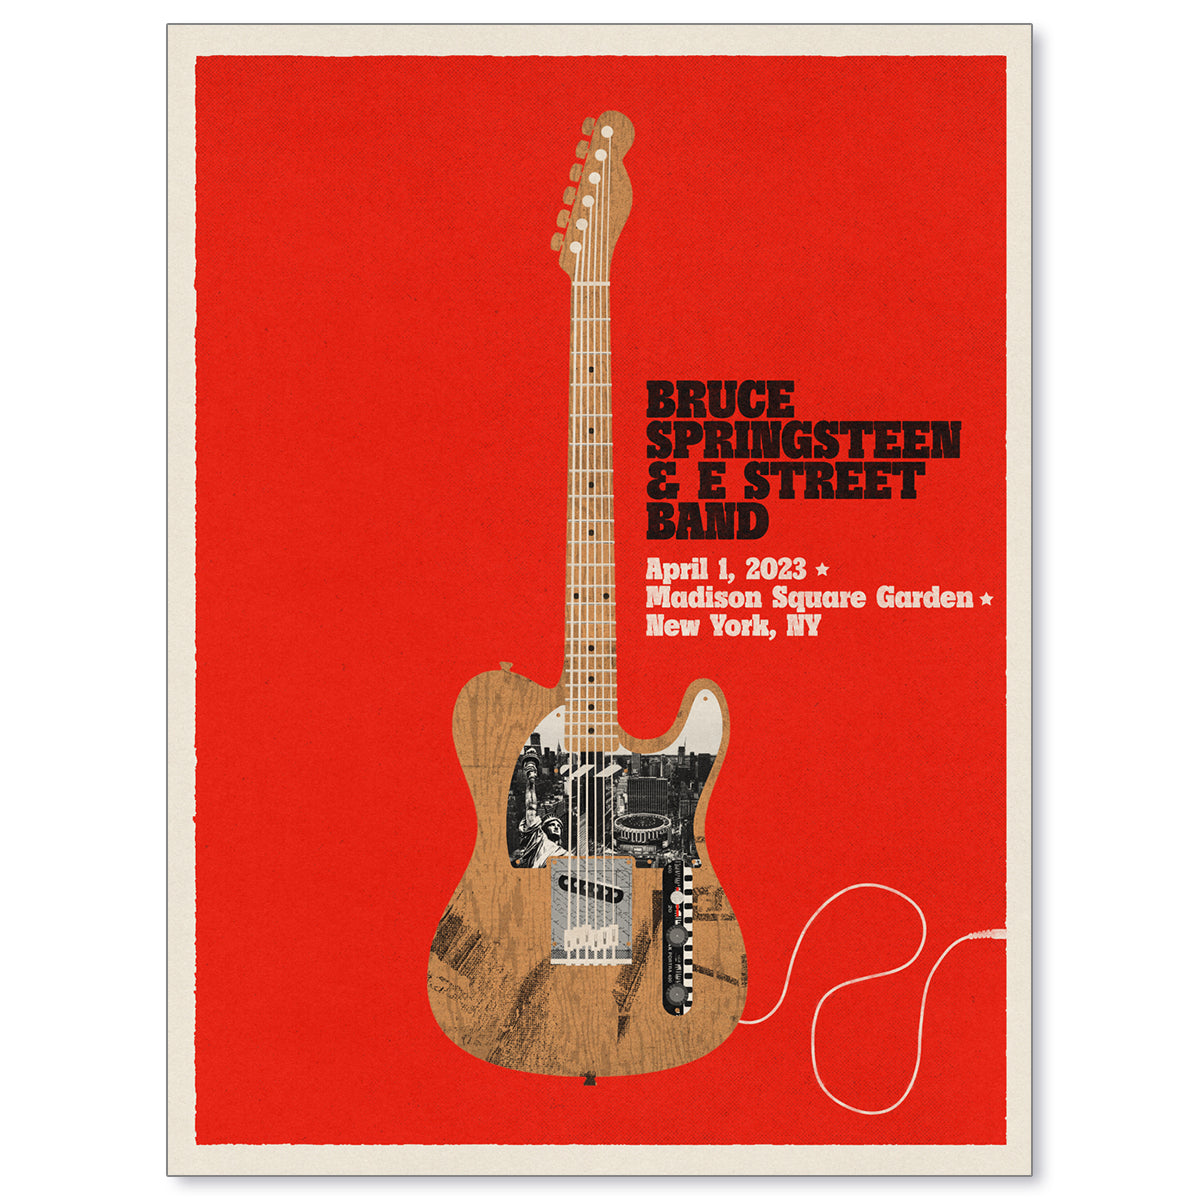 Bruce Springsteen & E Street Band New York City April 1, 2023